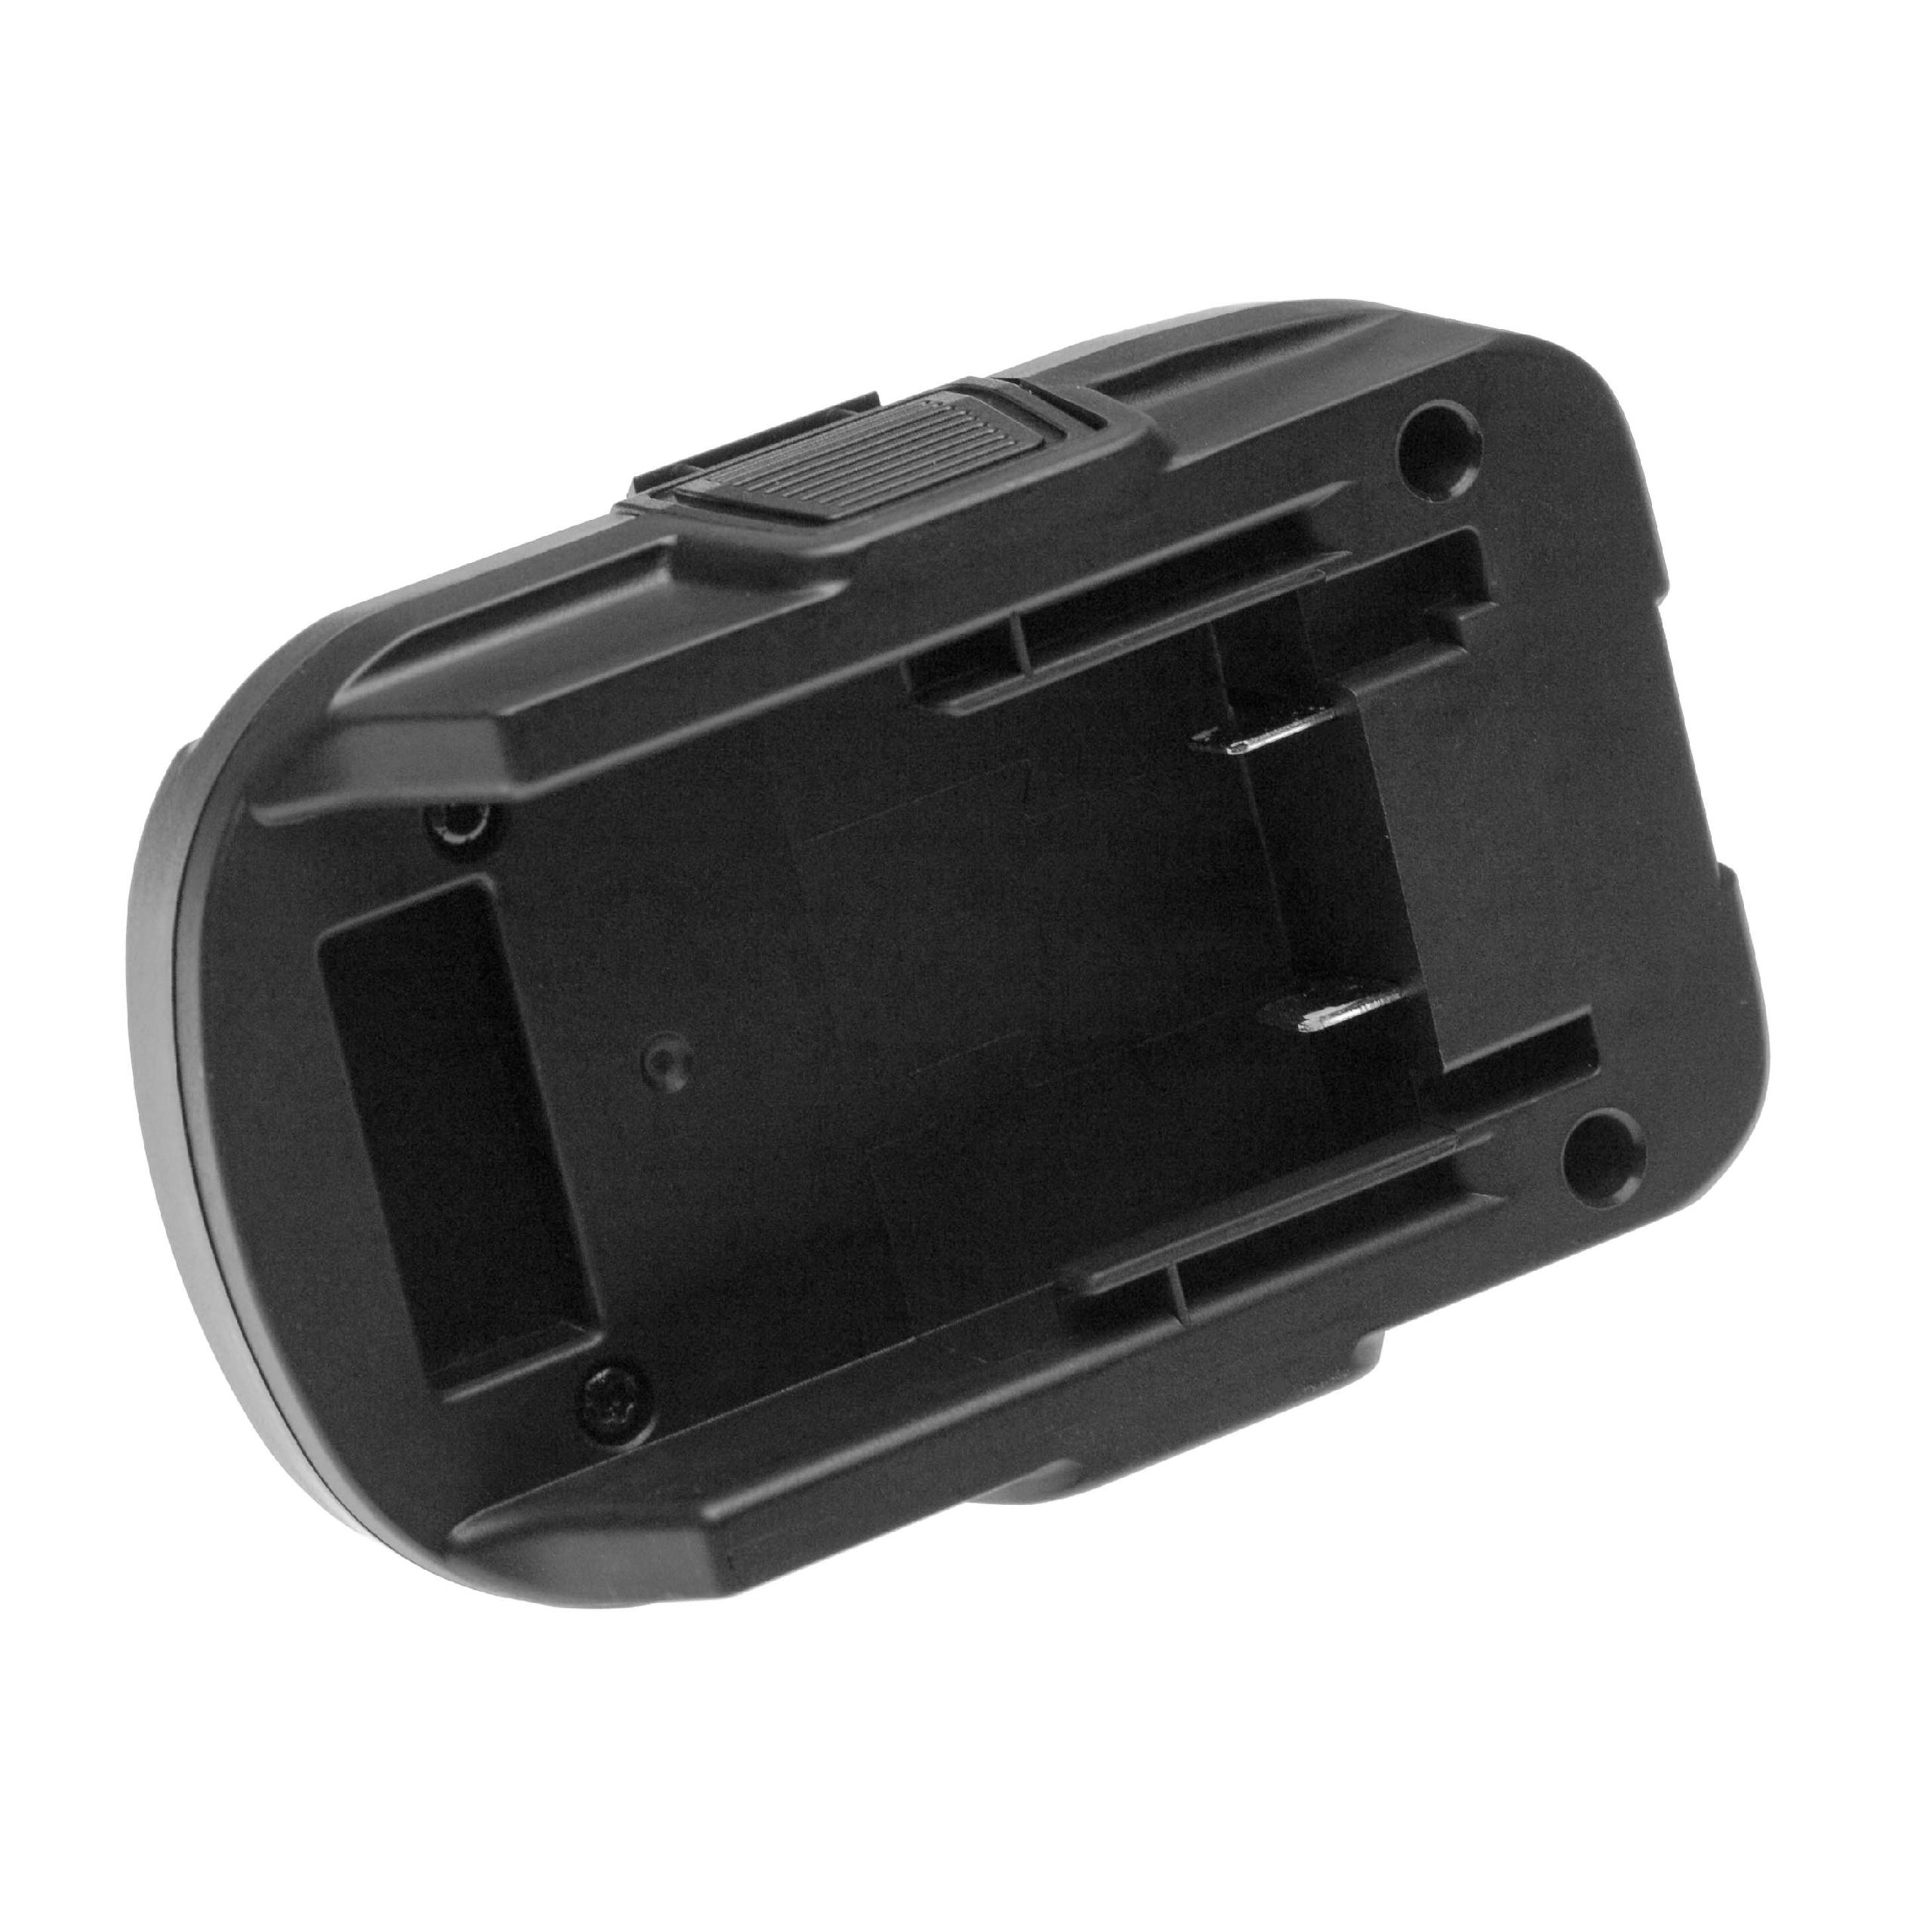 Battery Adapter suitable for , , Stanley, Black & Decker, Porter Cable Tool - 20 V Li-Ion to 18 V Ryobi